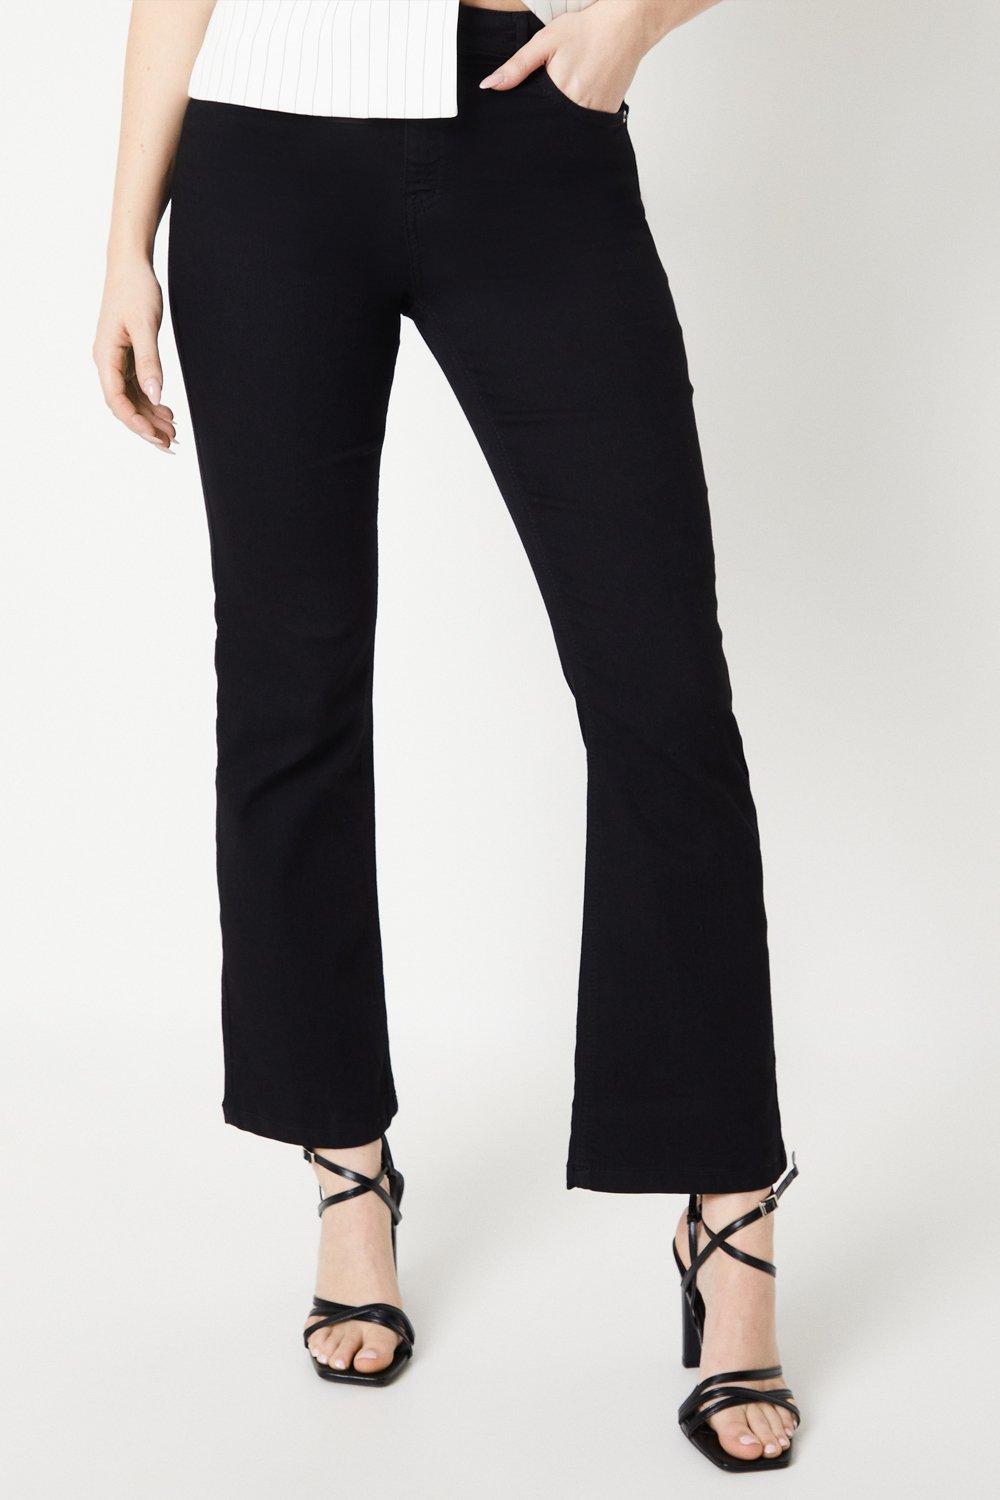 Women’s Comfort Stretch Bootcut Jeans - black - 14